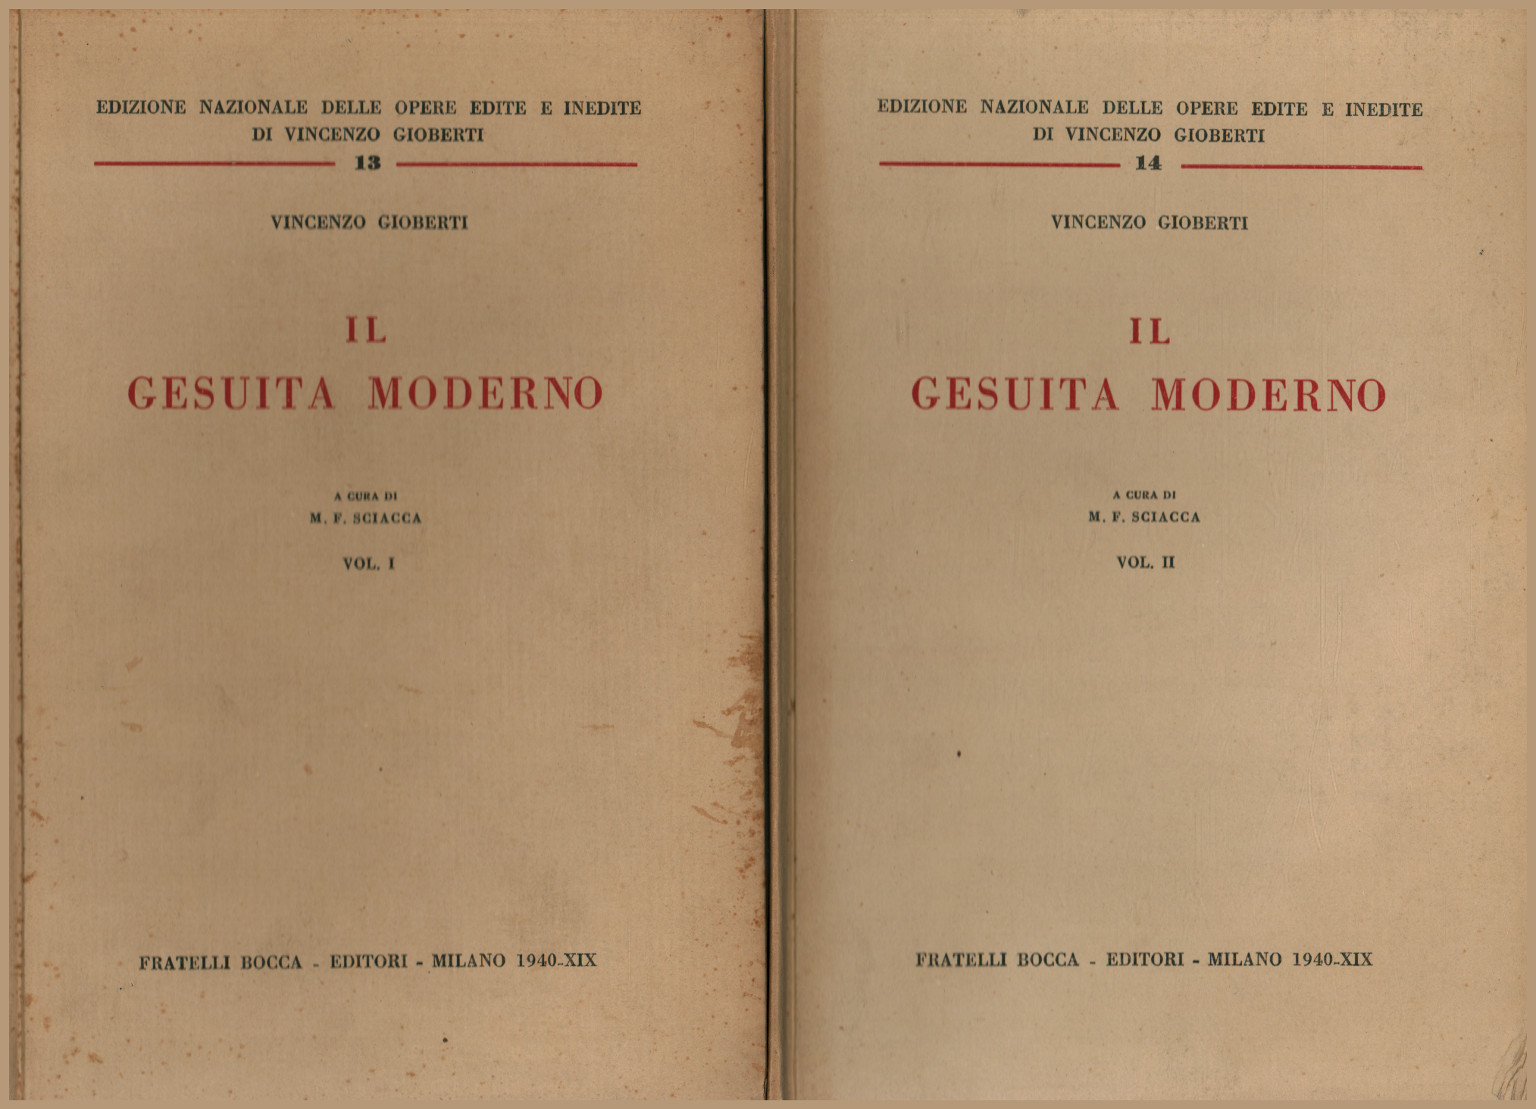 Le jésuite moderne (2 volumes), Vincenzo Gioberti